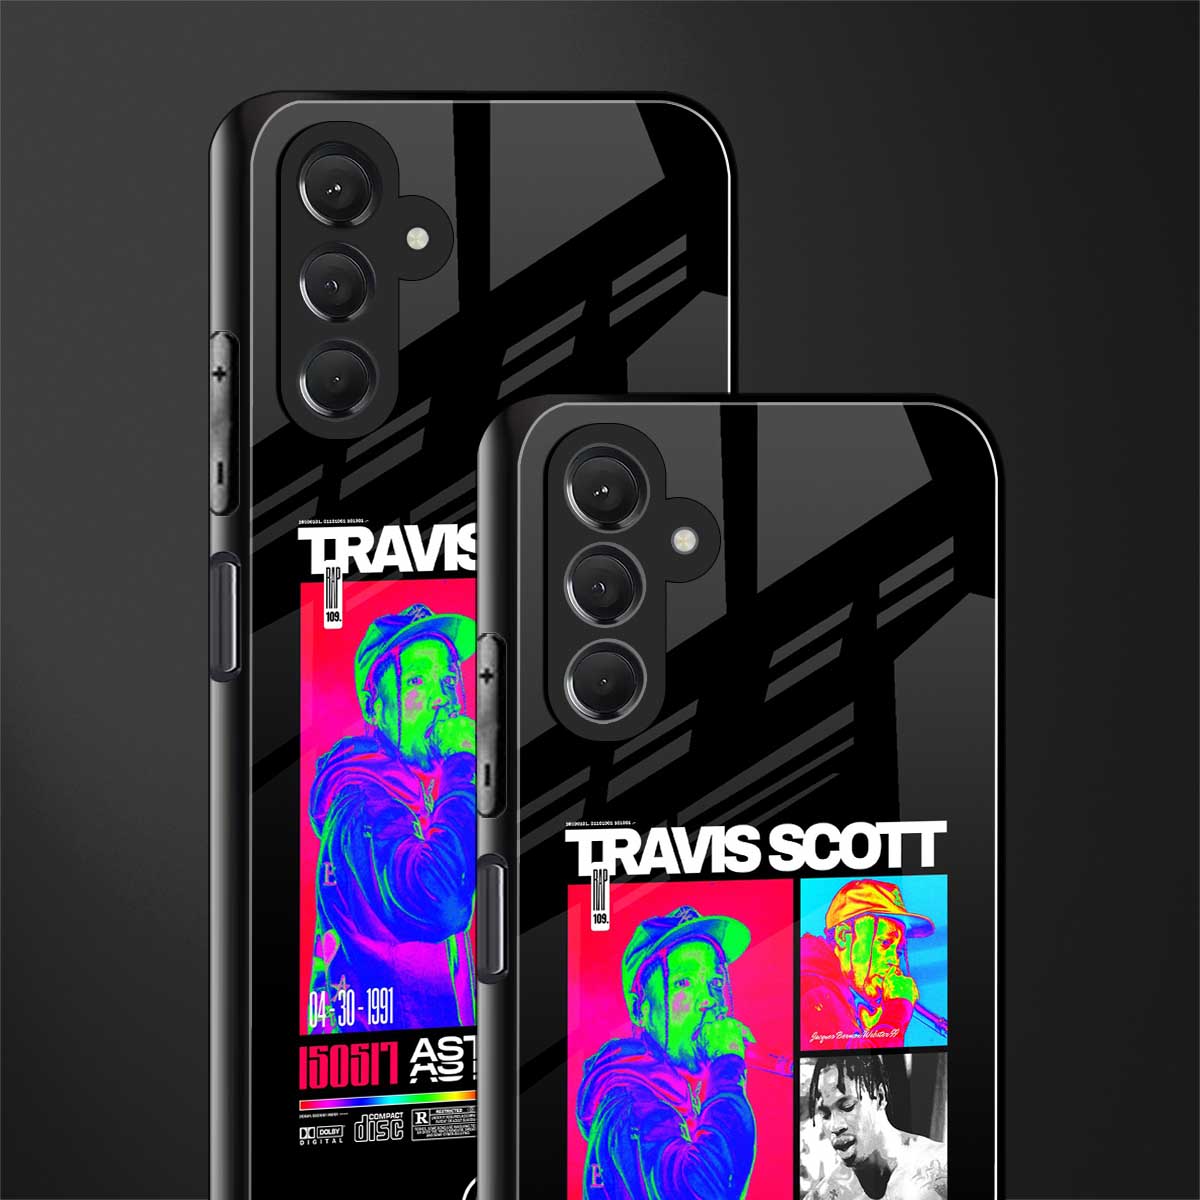 travis scott astroworld back phone cover | glass case for samsun galaxy a24 4g